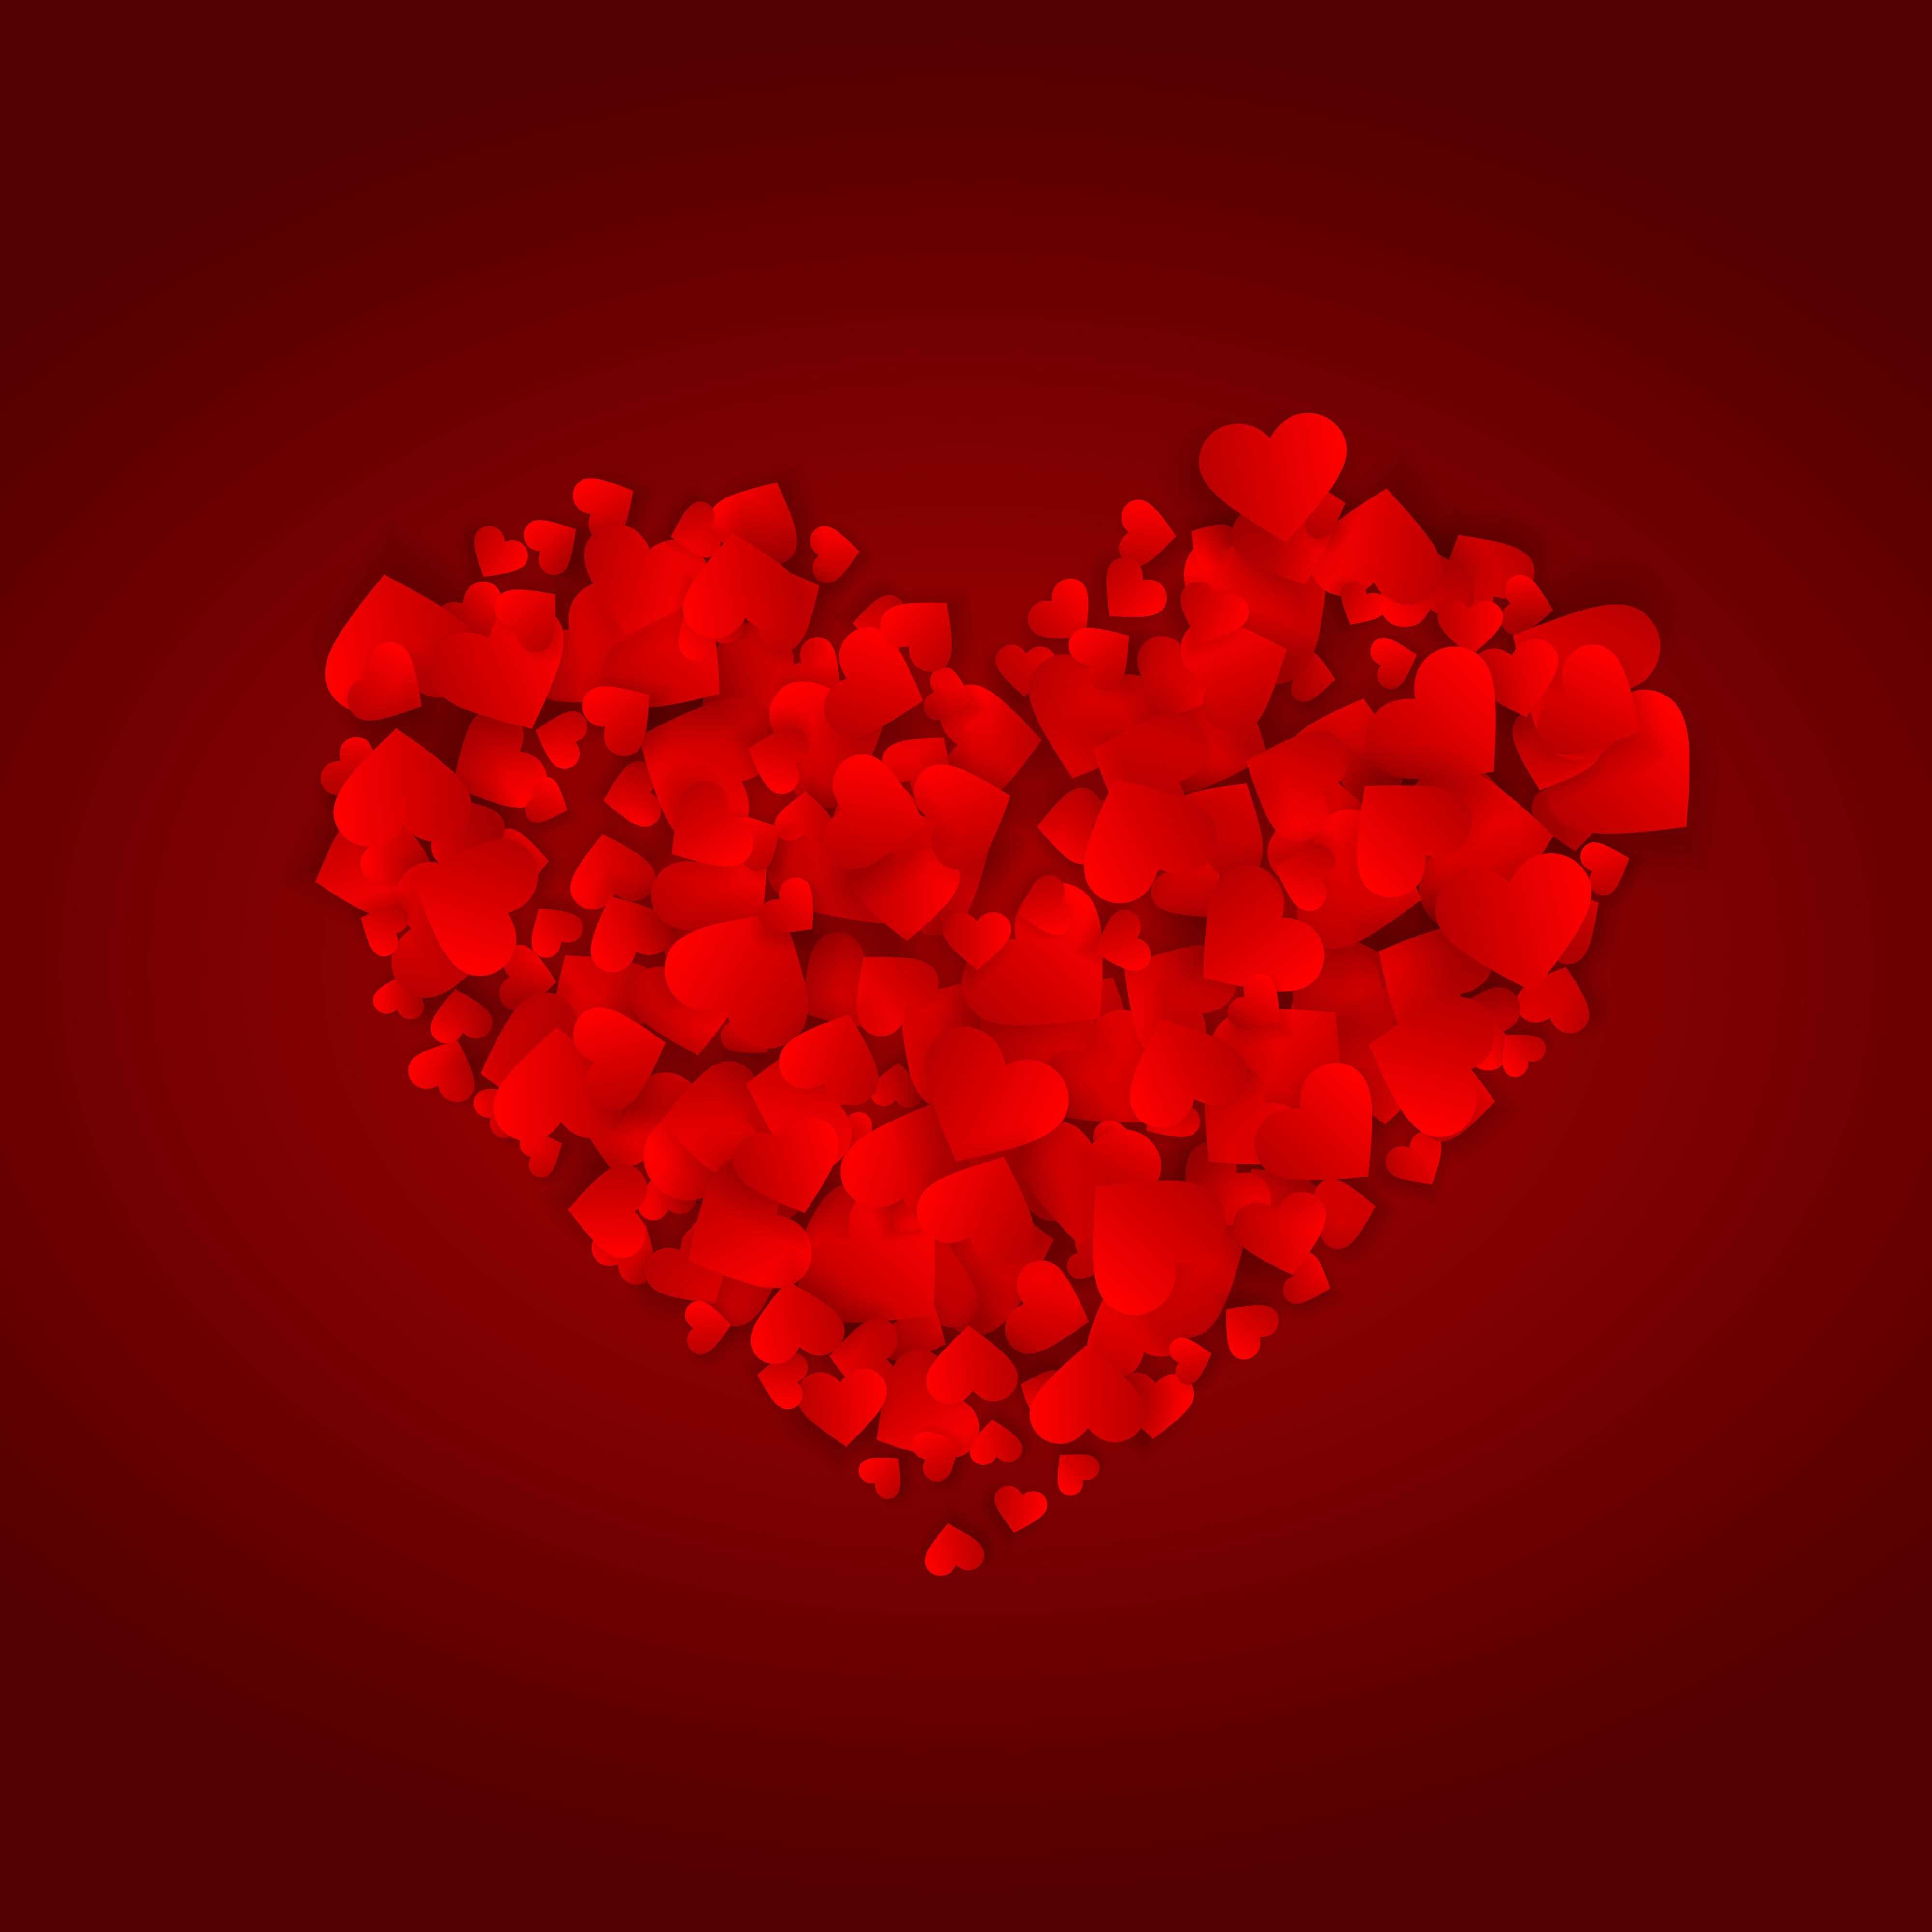 Download beautiful love red heart vector design illustration - Download Free Vector Art, Stock Graphics ...